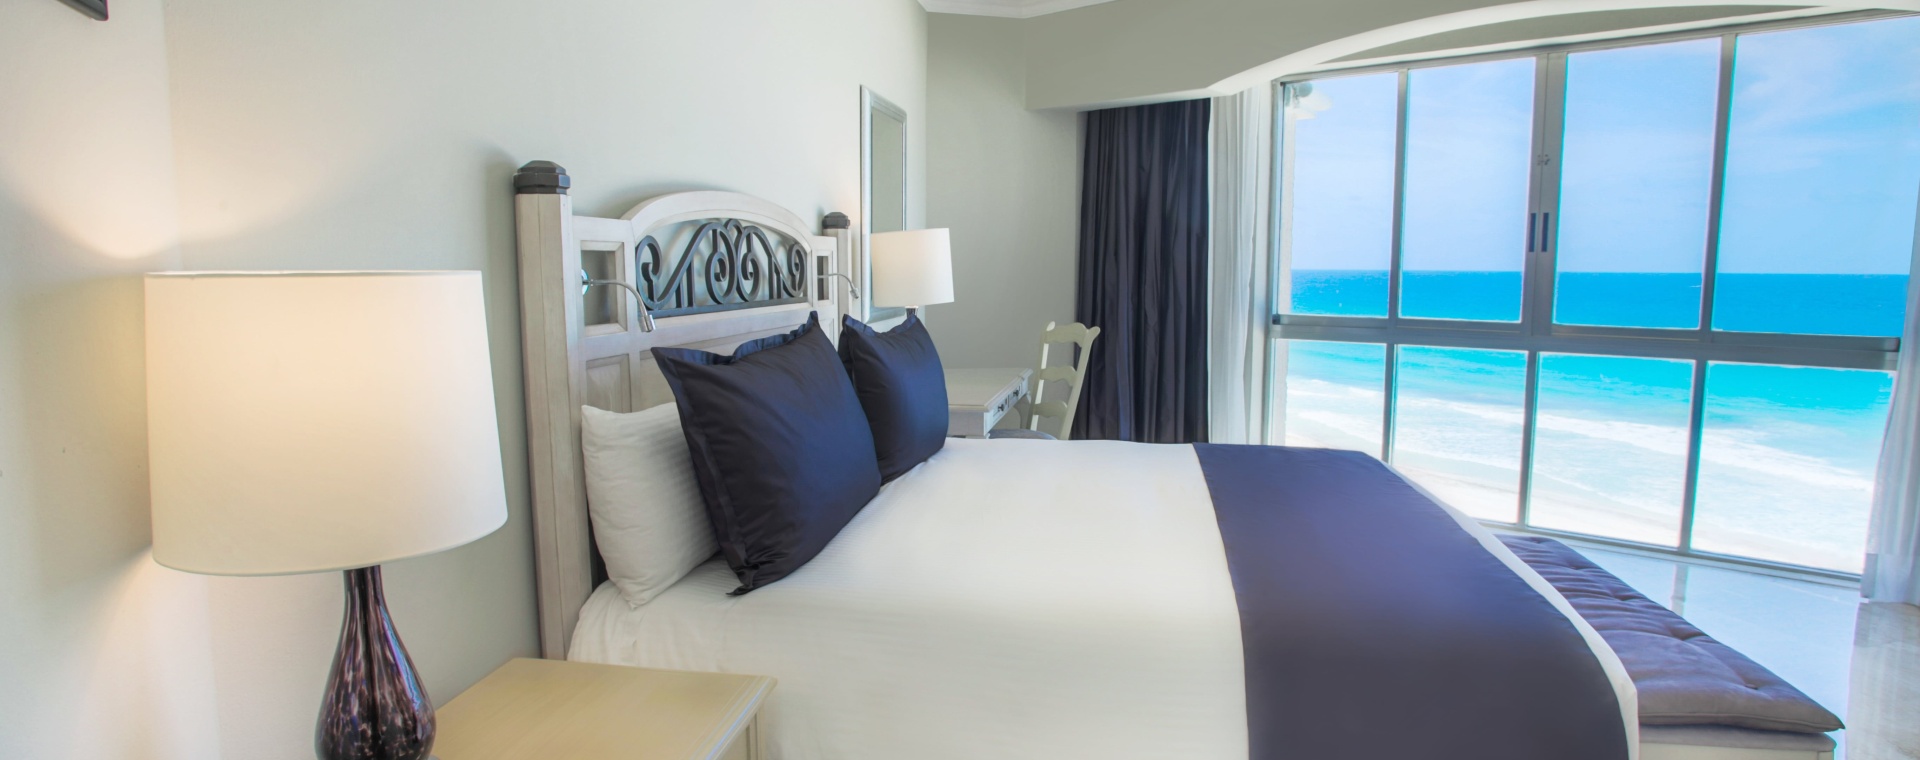 Sandos_Cancun_Room_Suite_Caribe